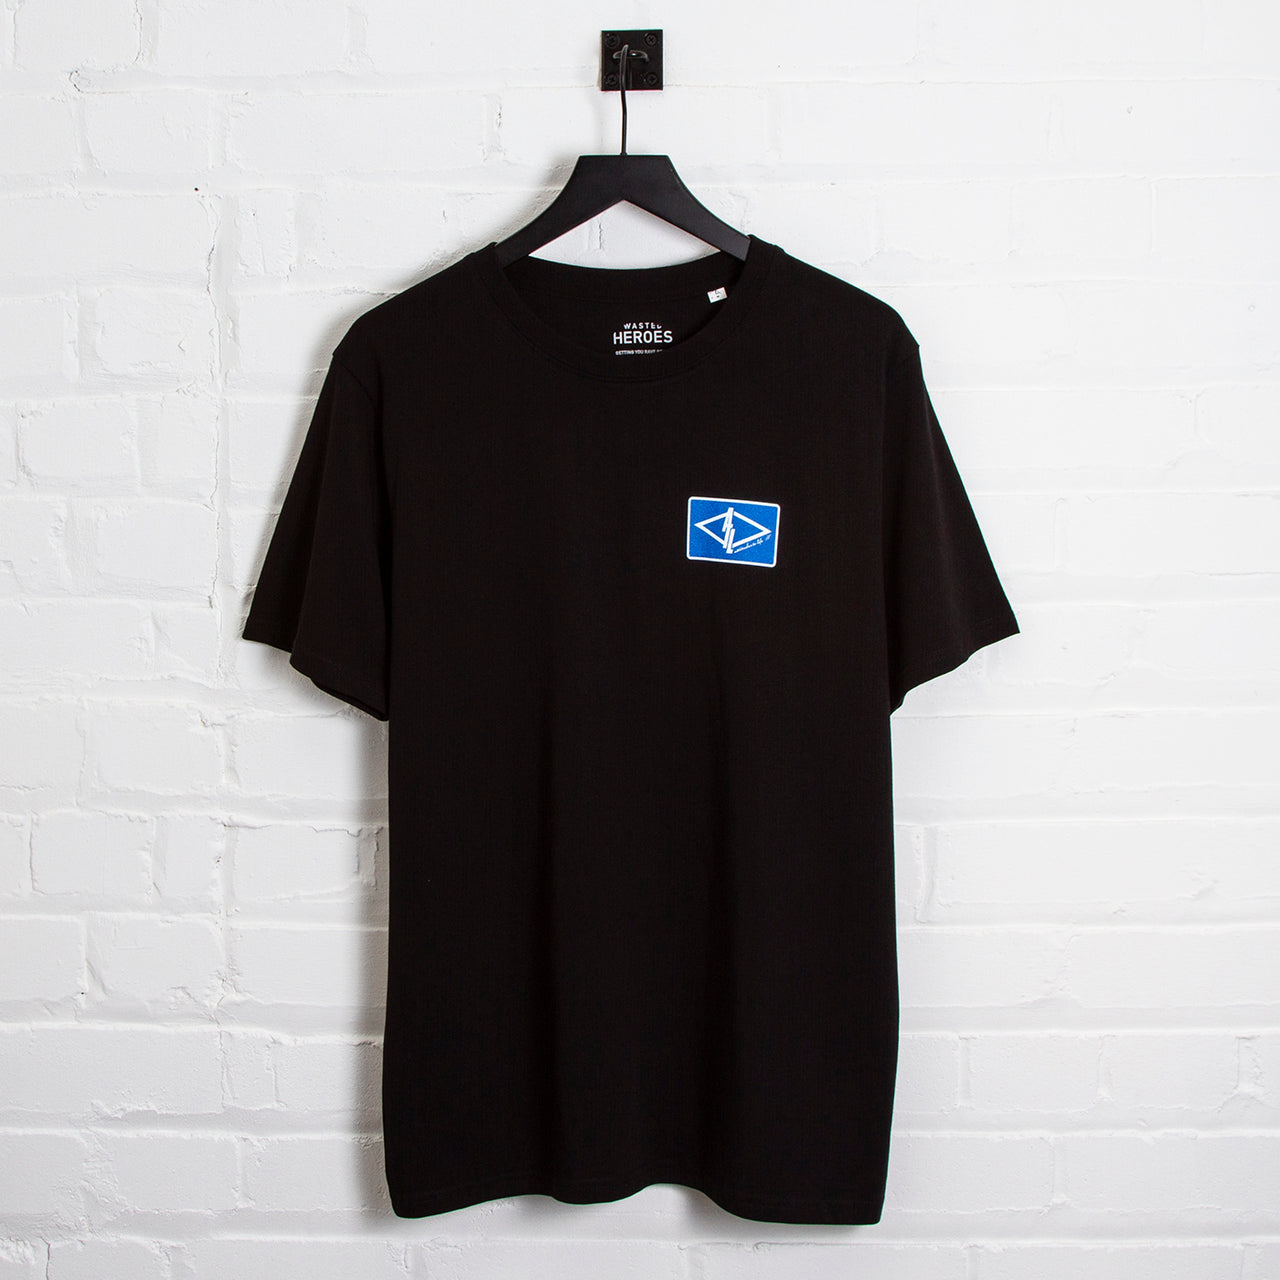 Matrefakt Attitudes To Life 009 Back Print - Tshirt - Black